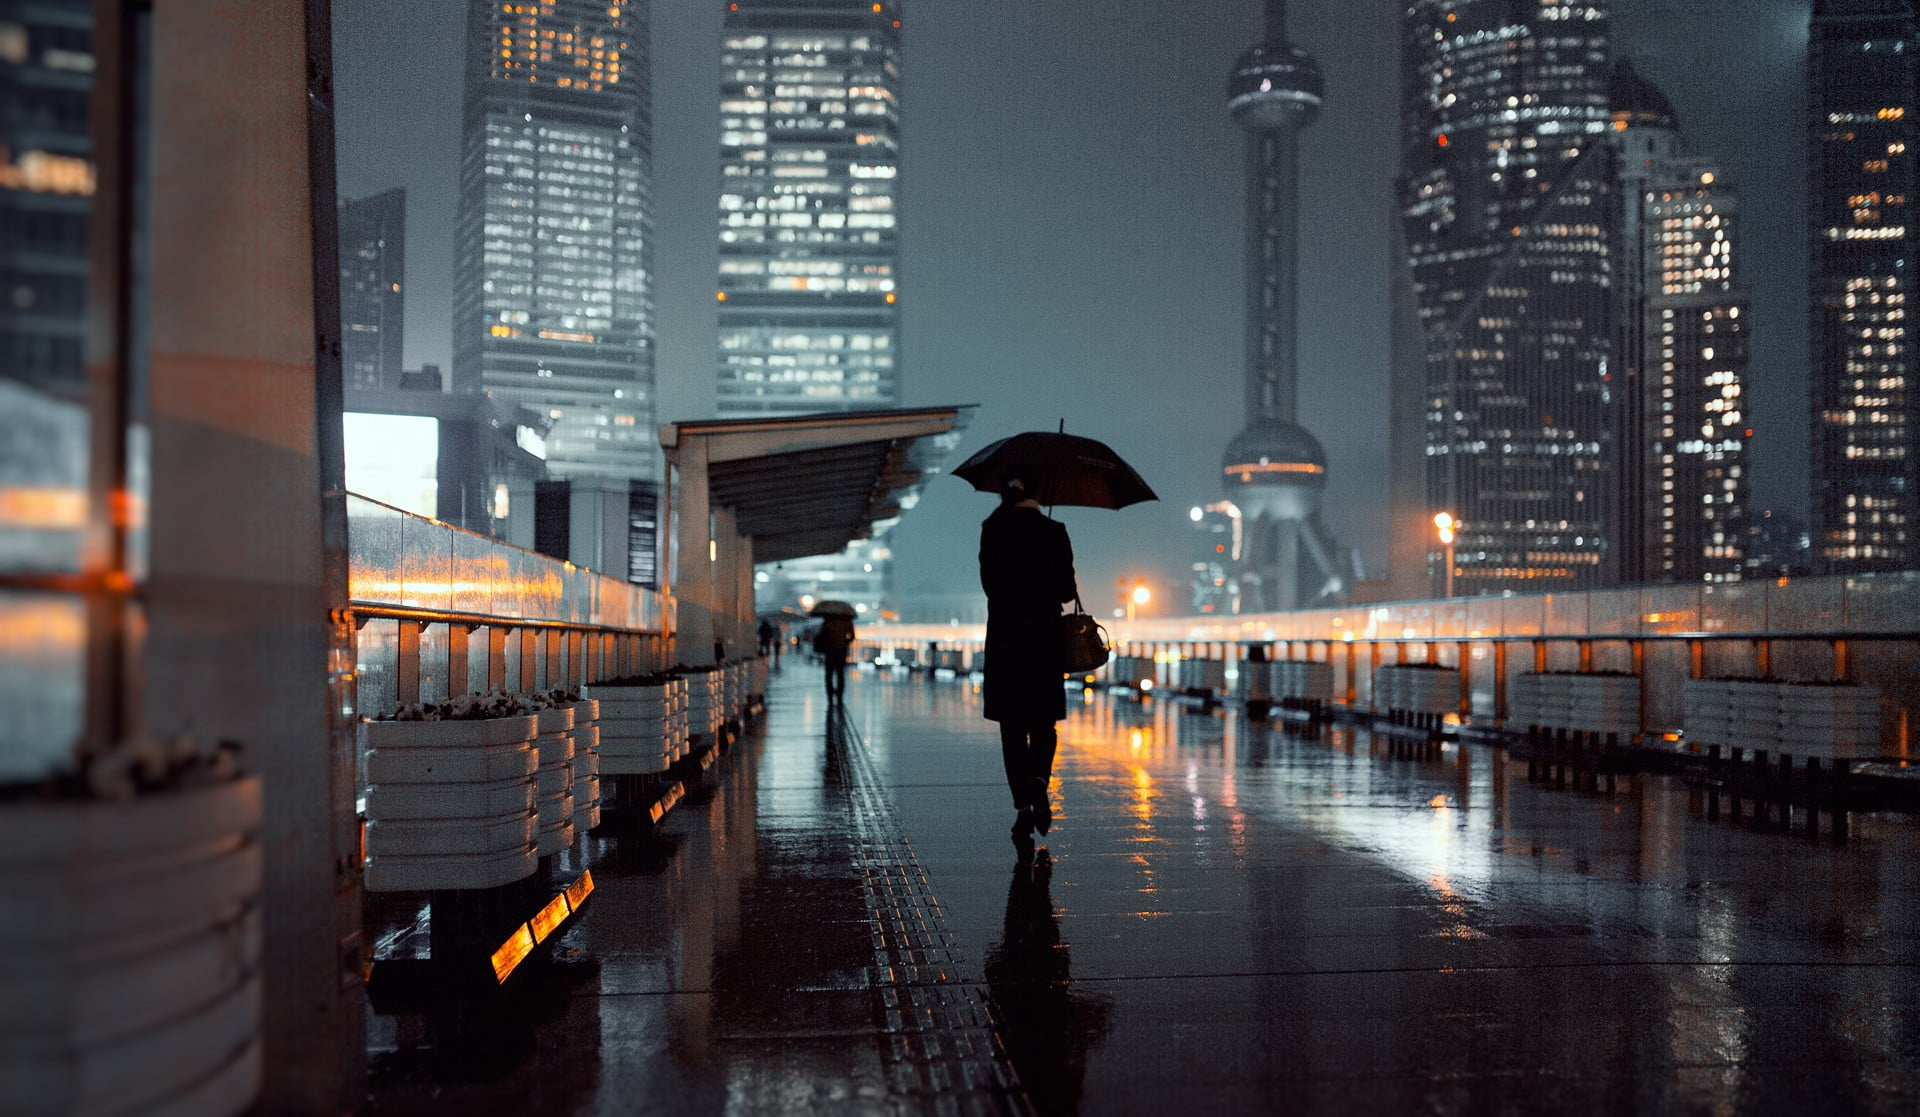 Black umbrella wallpaper, person holding umbrella walking on street during nightime